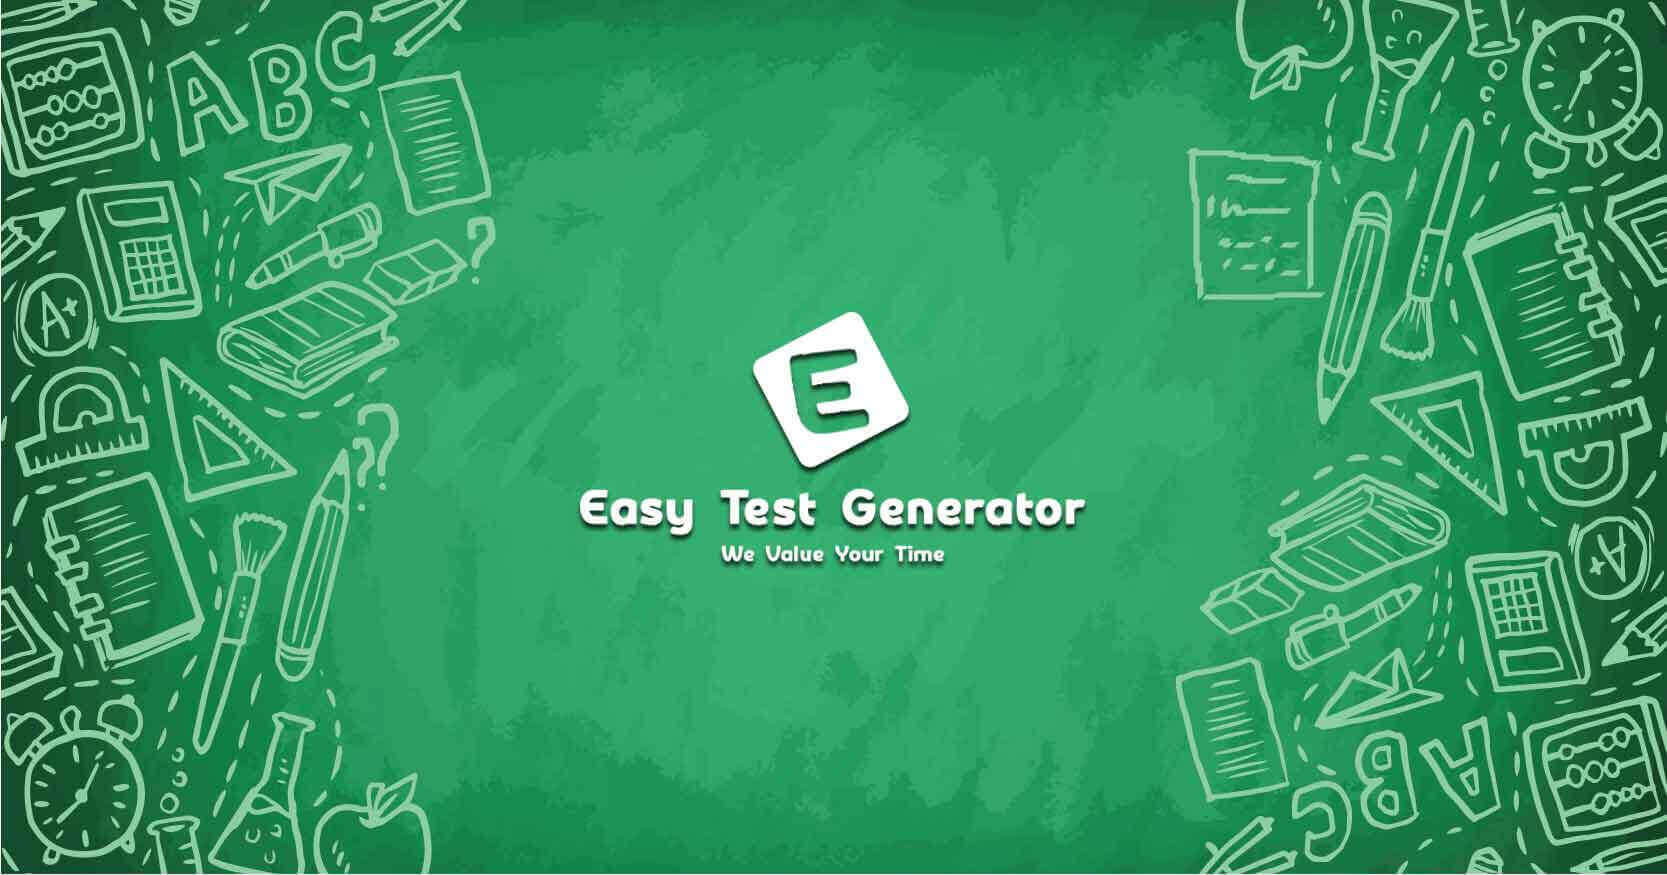 Online Easy Test Generator Home